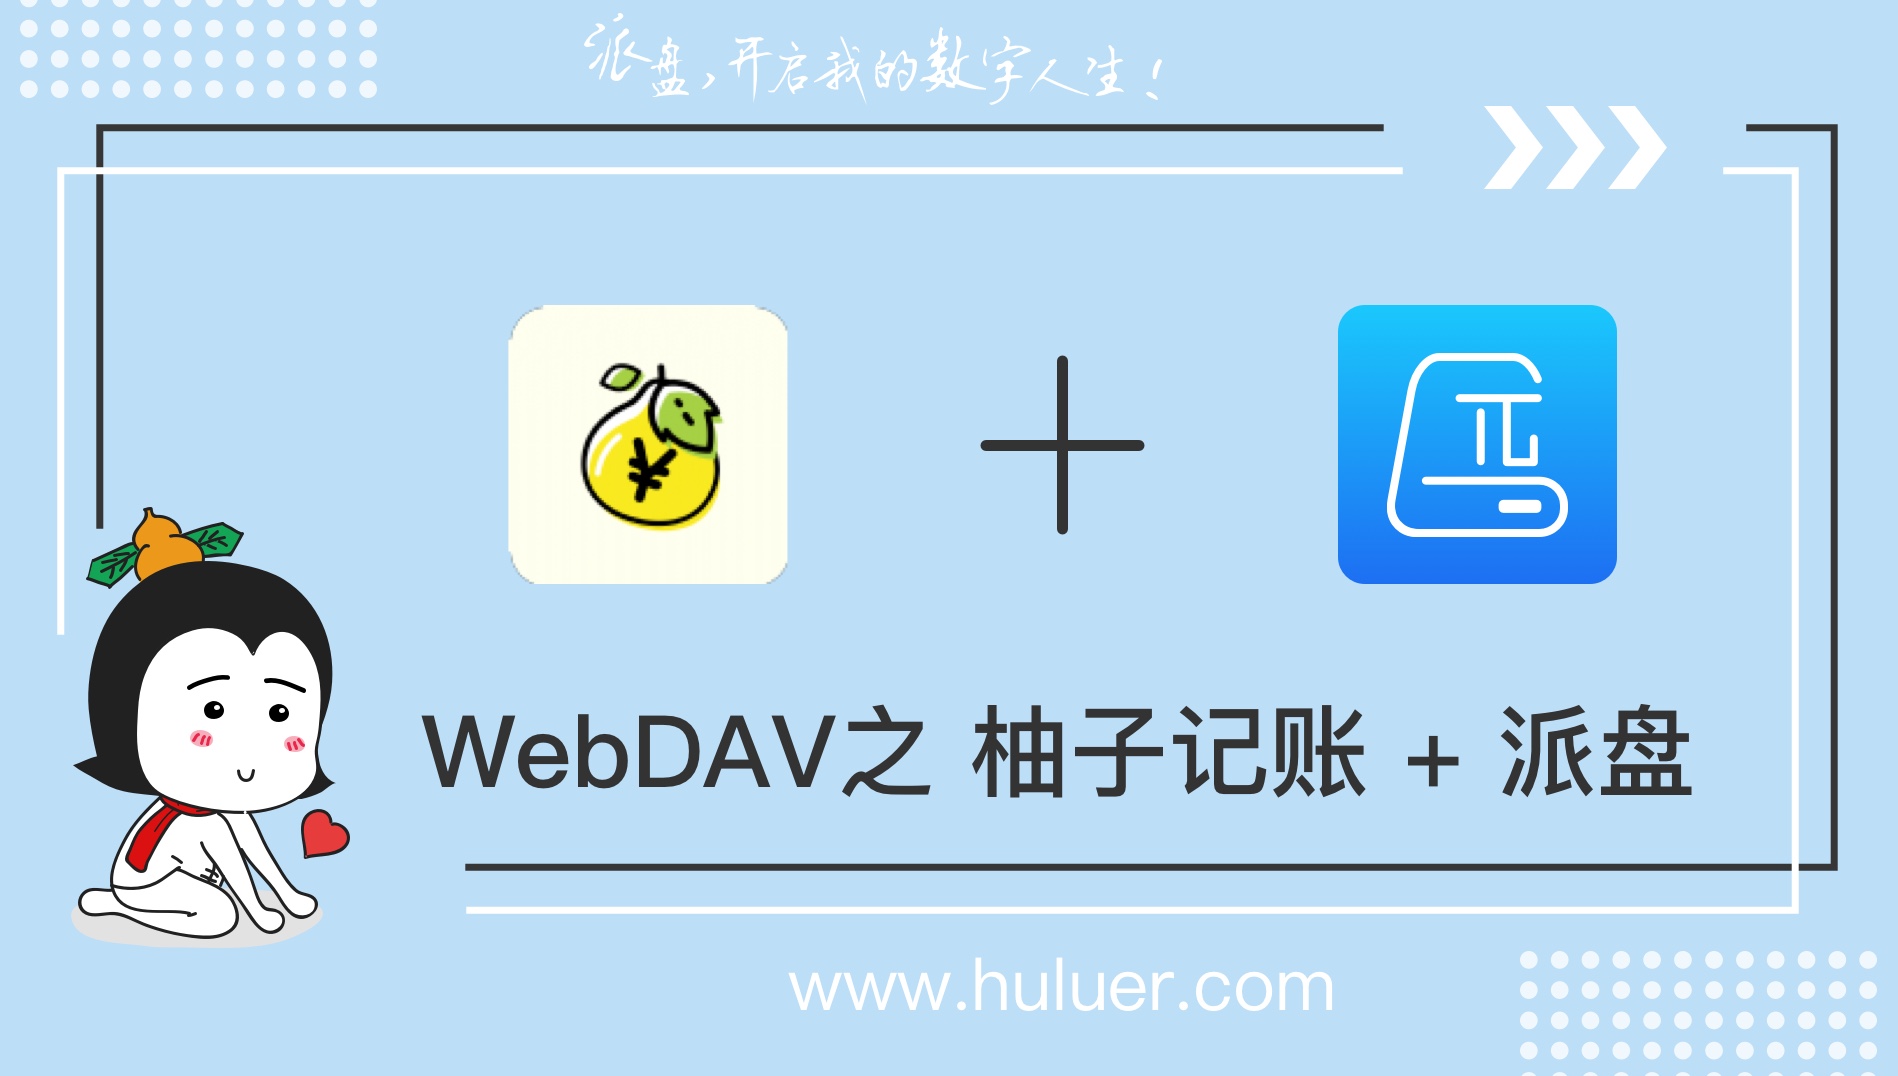 WebDAV之葫芦儿·派盘+柚子记账